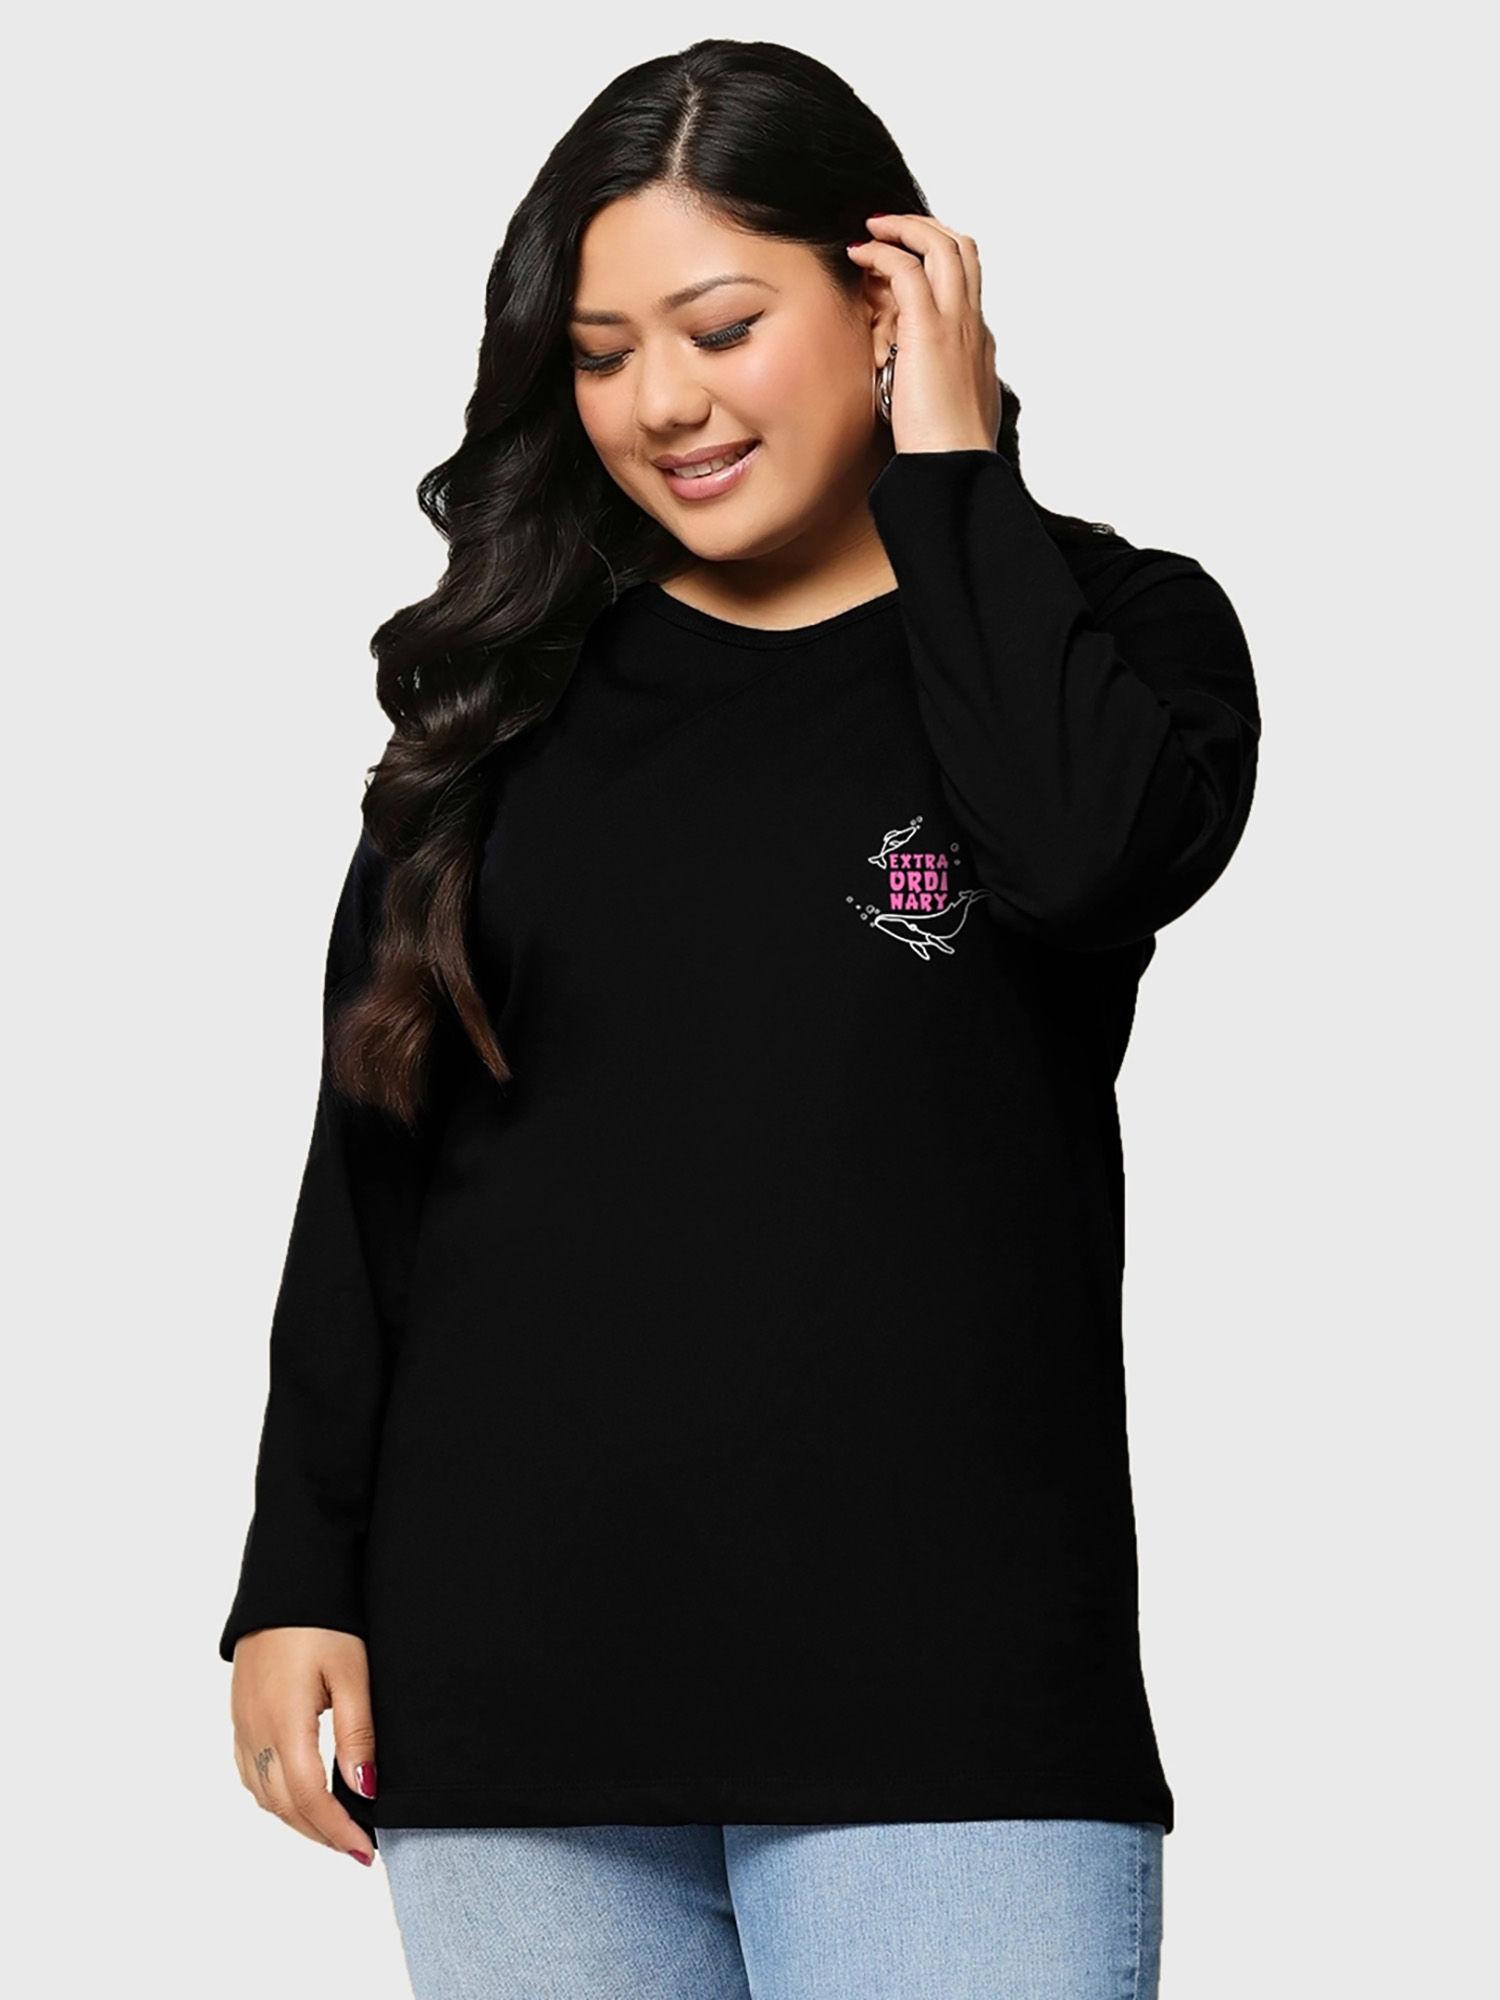 women's black extraordinary woo graphic printed plus size t-shirt